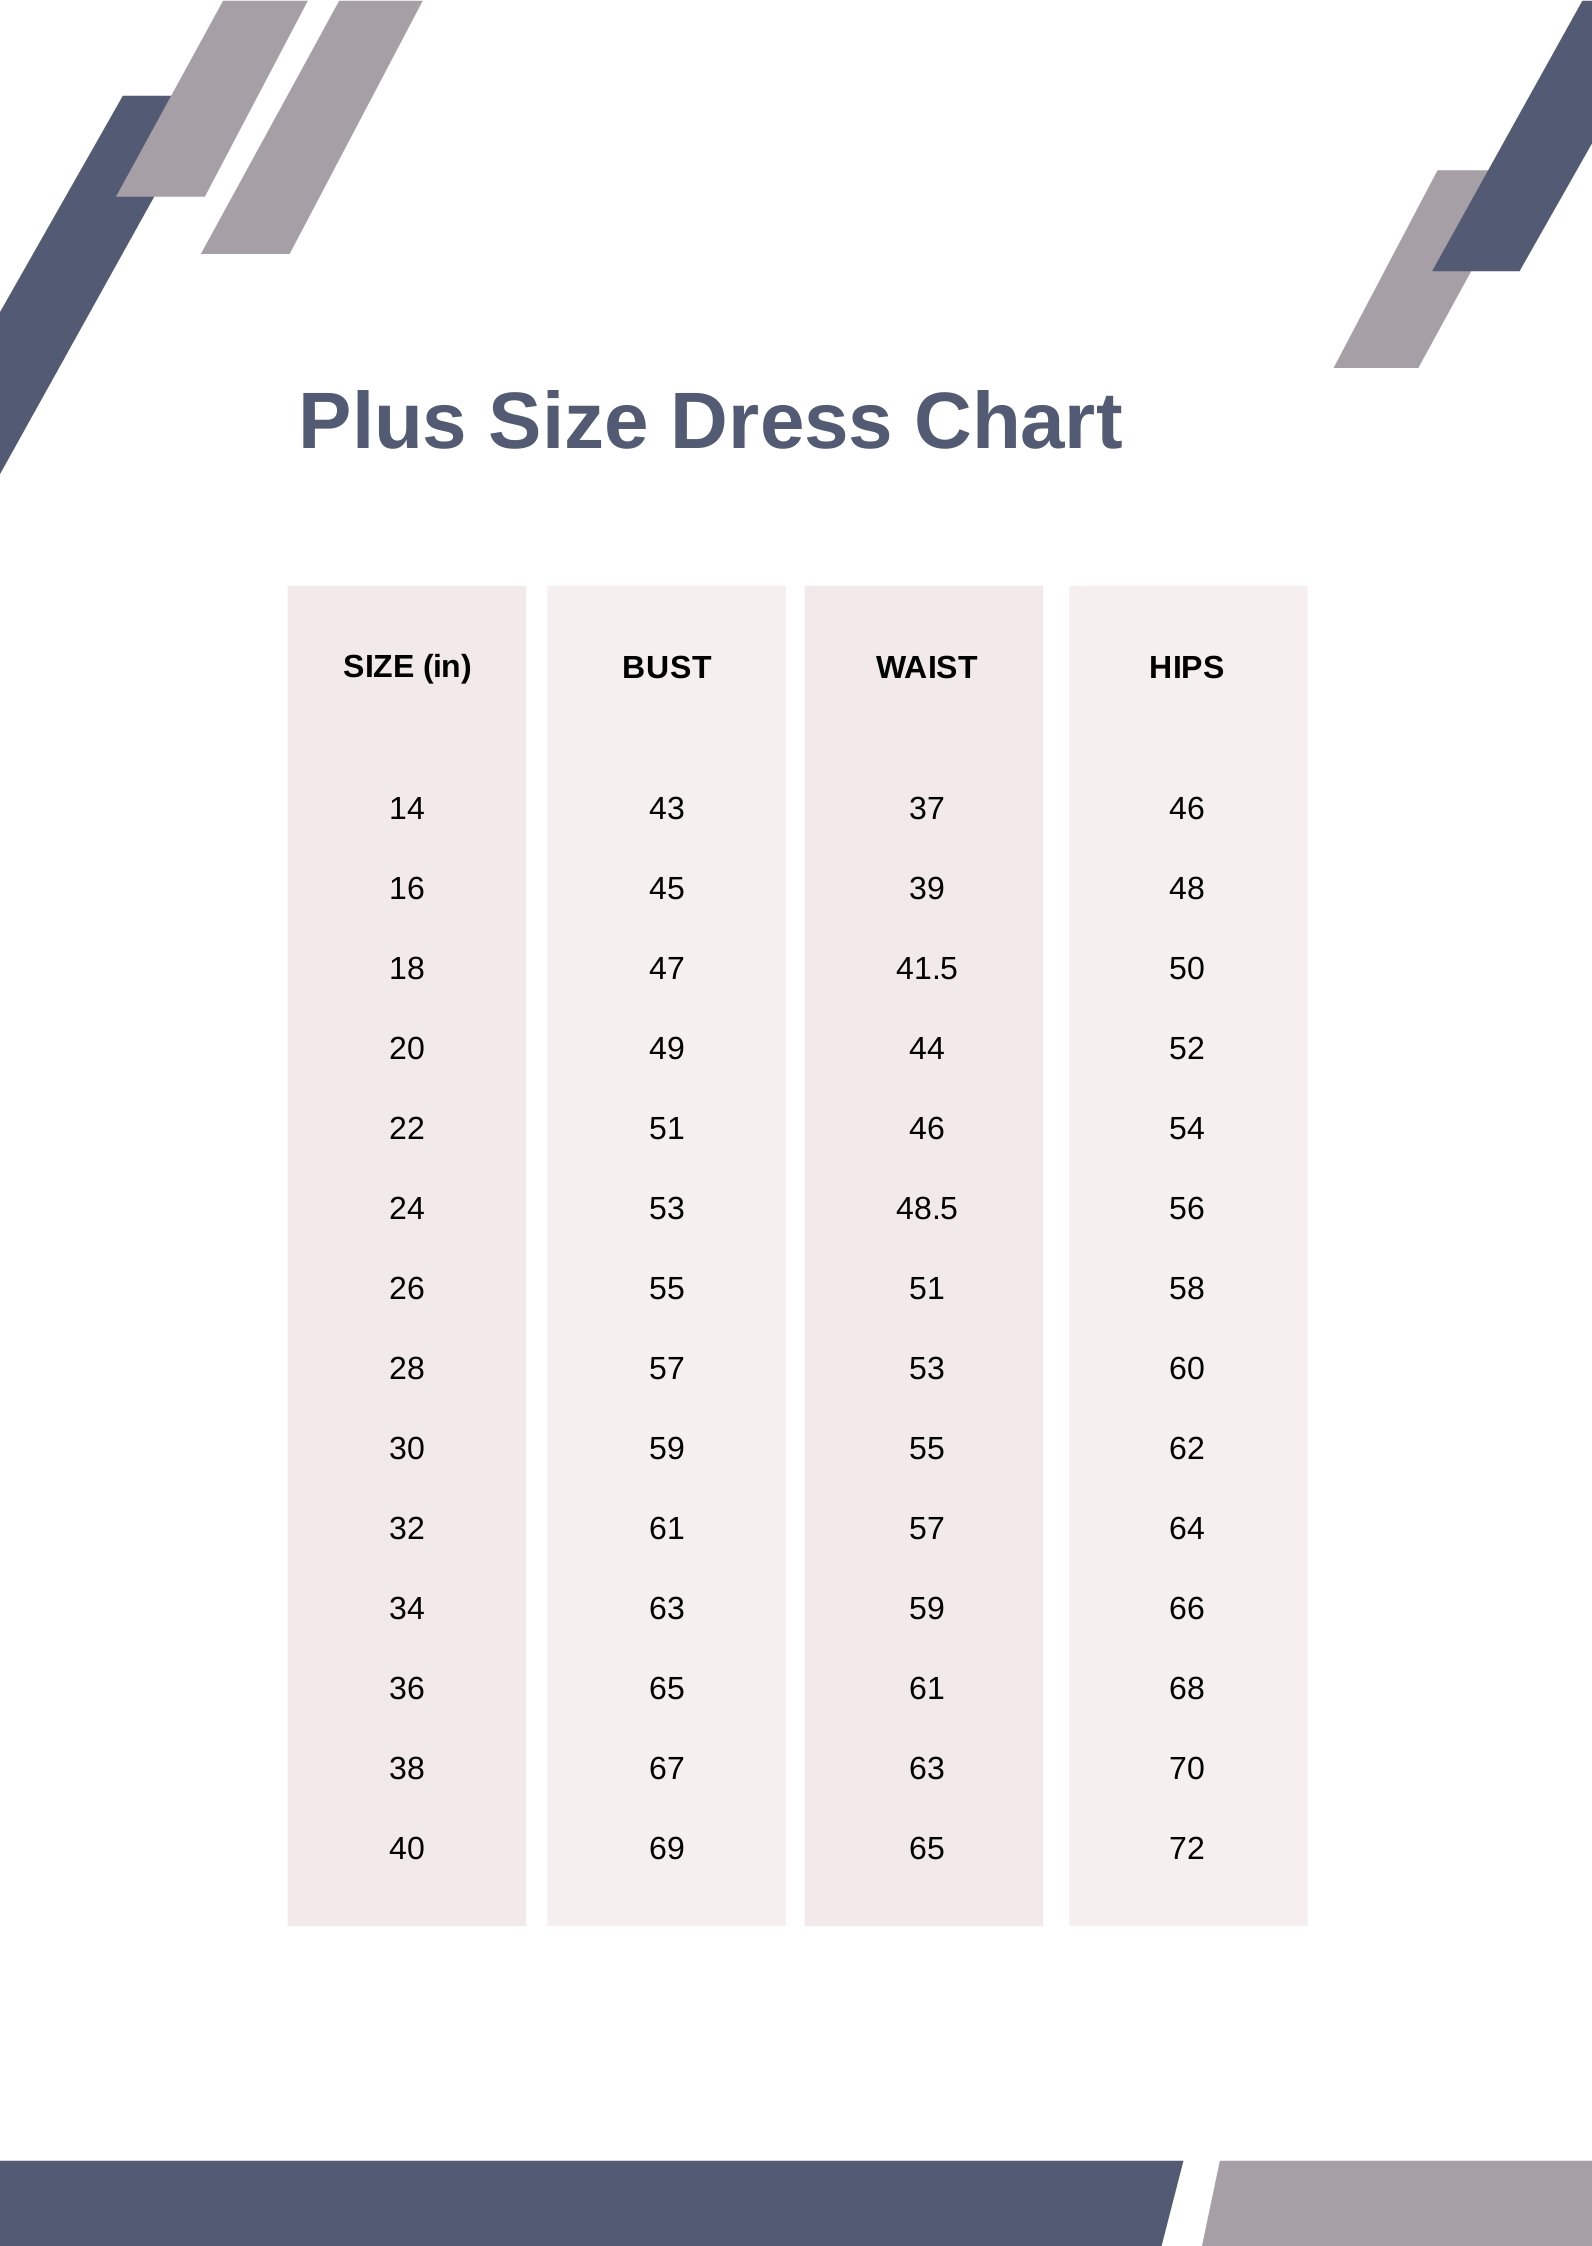 Plus Size Dress Size Chart in PDF - Download | Template.net